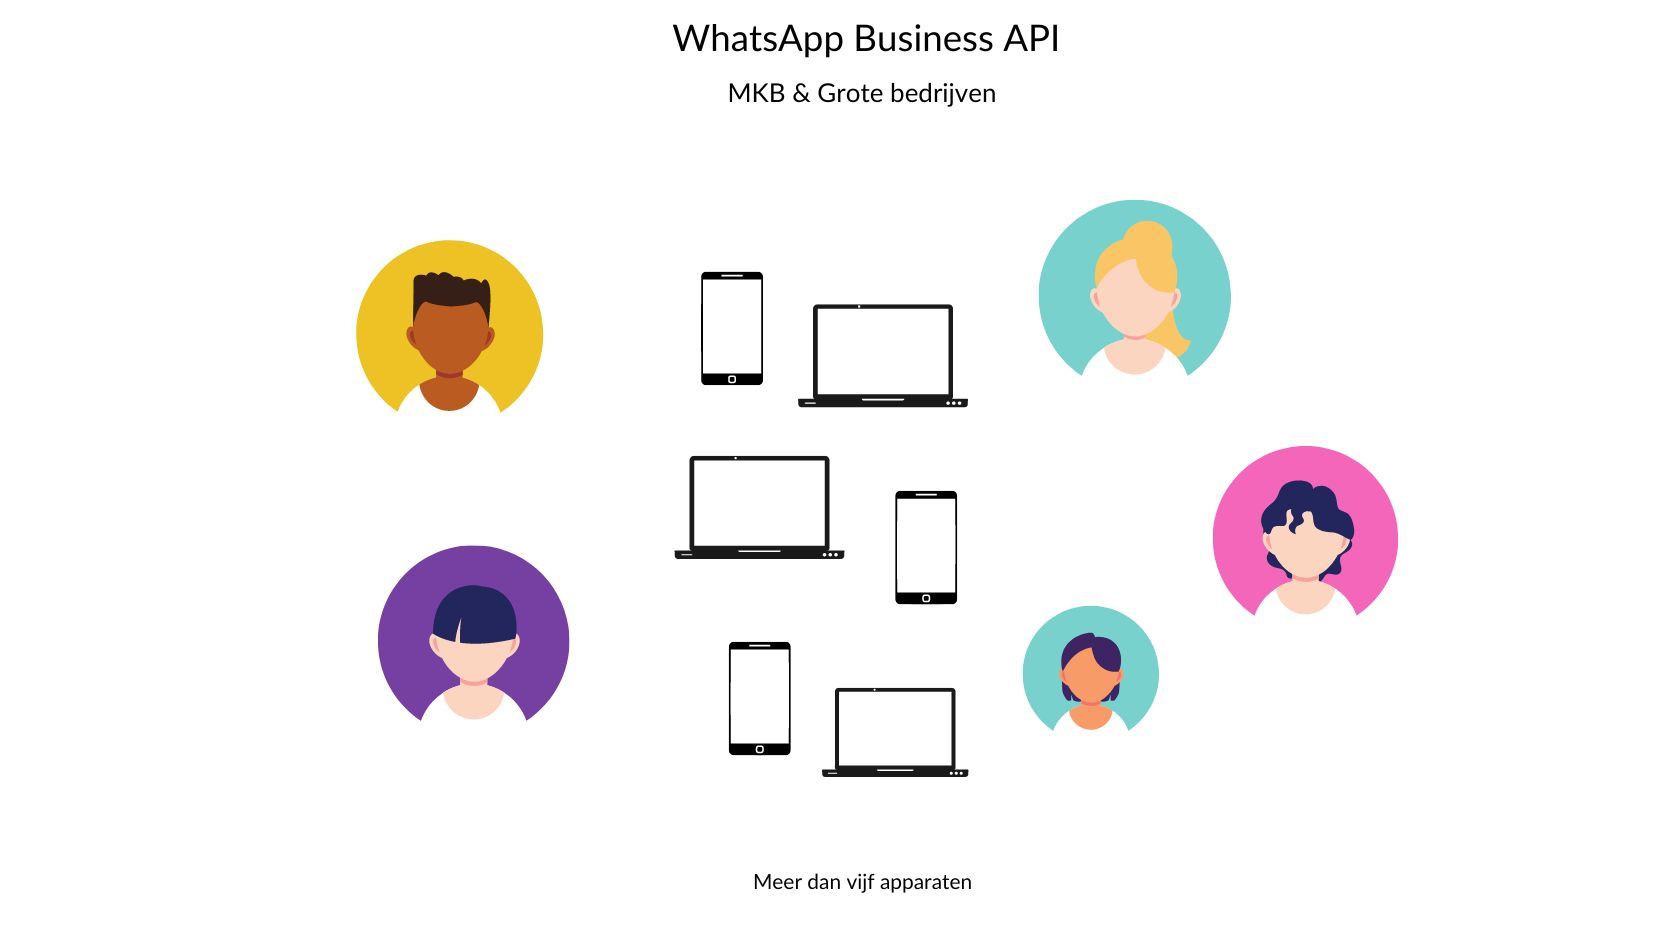 Whatsapp Business API